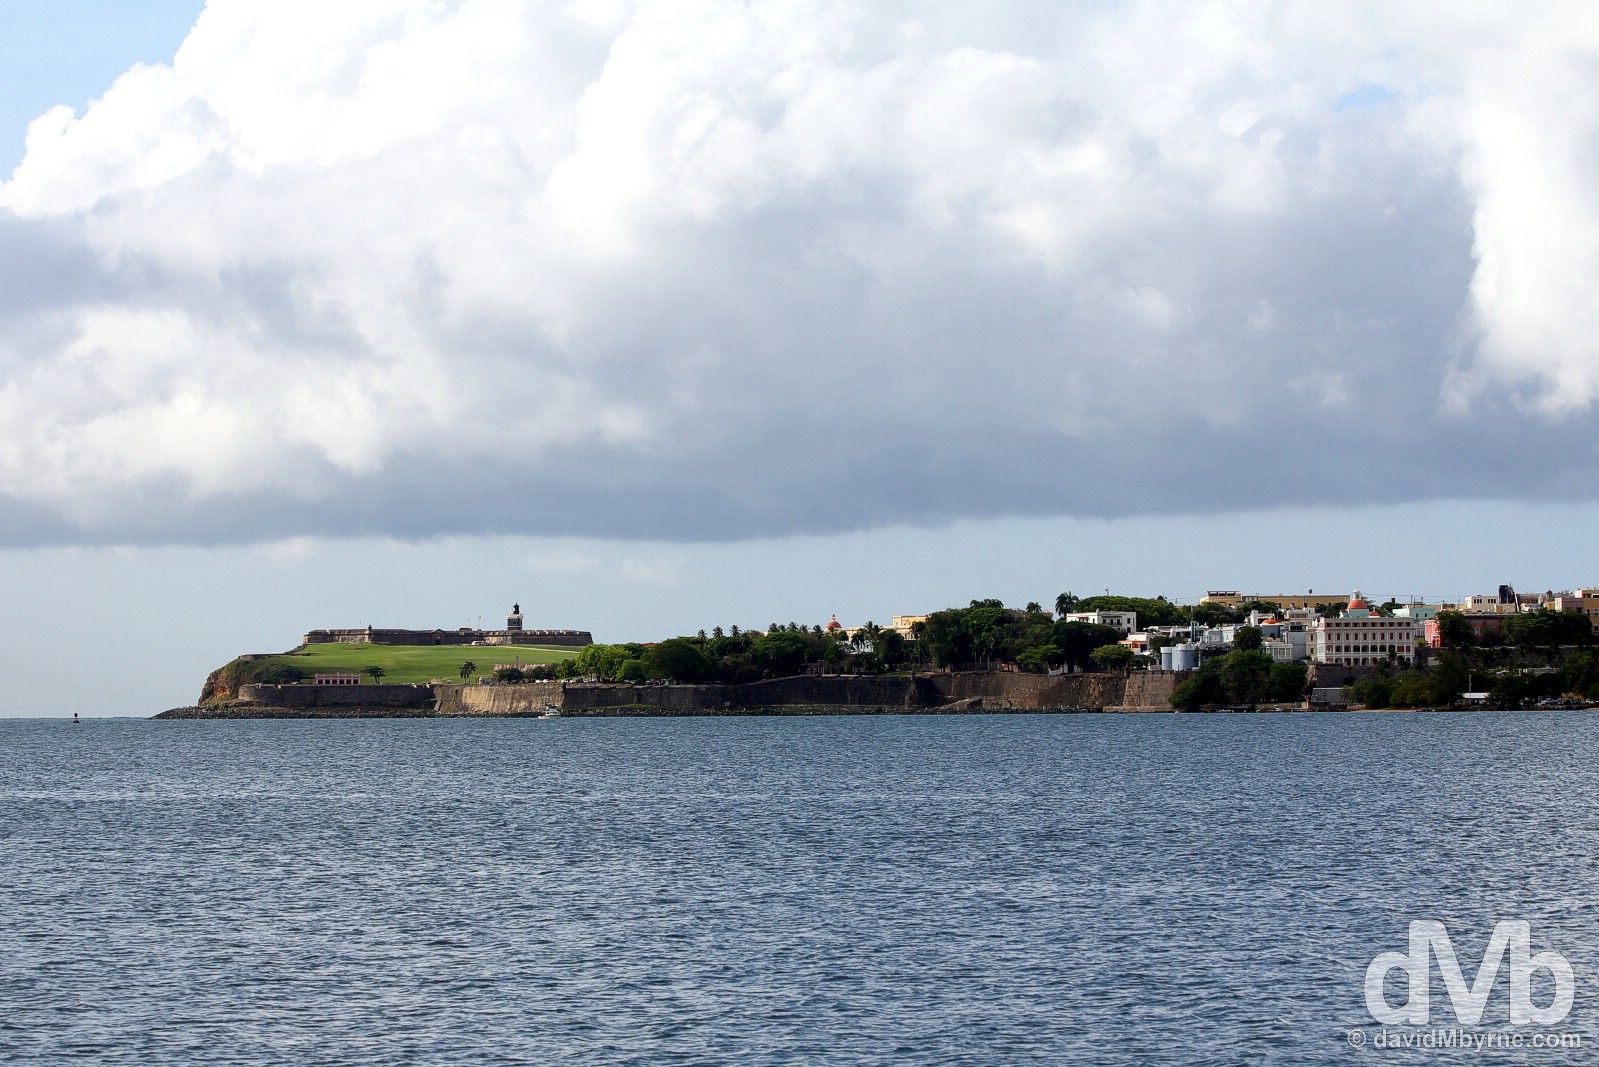 Old San Juan as seen from Bahia de San Juan in Cataño. Puerto Rico, Greater Antilles. June 2, 2015.